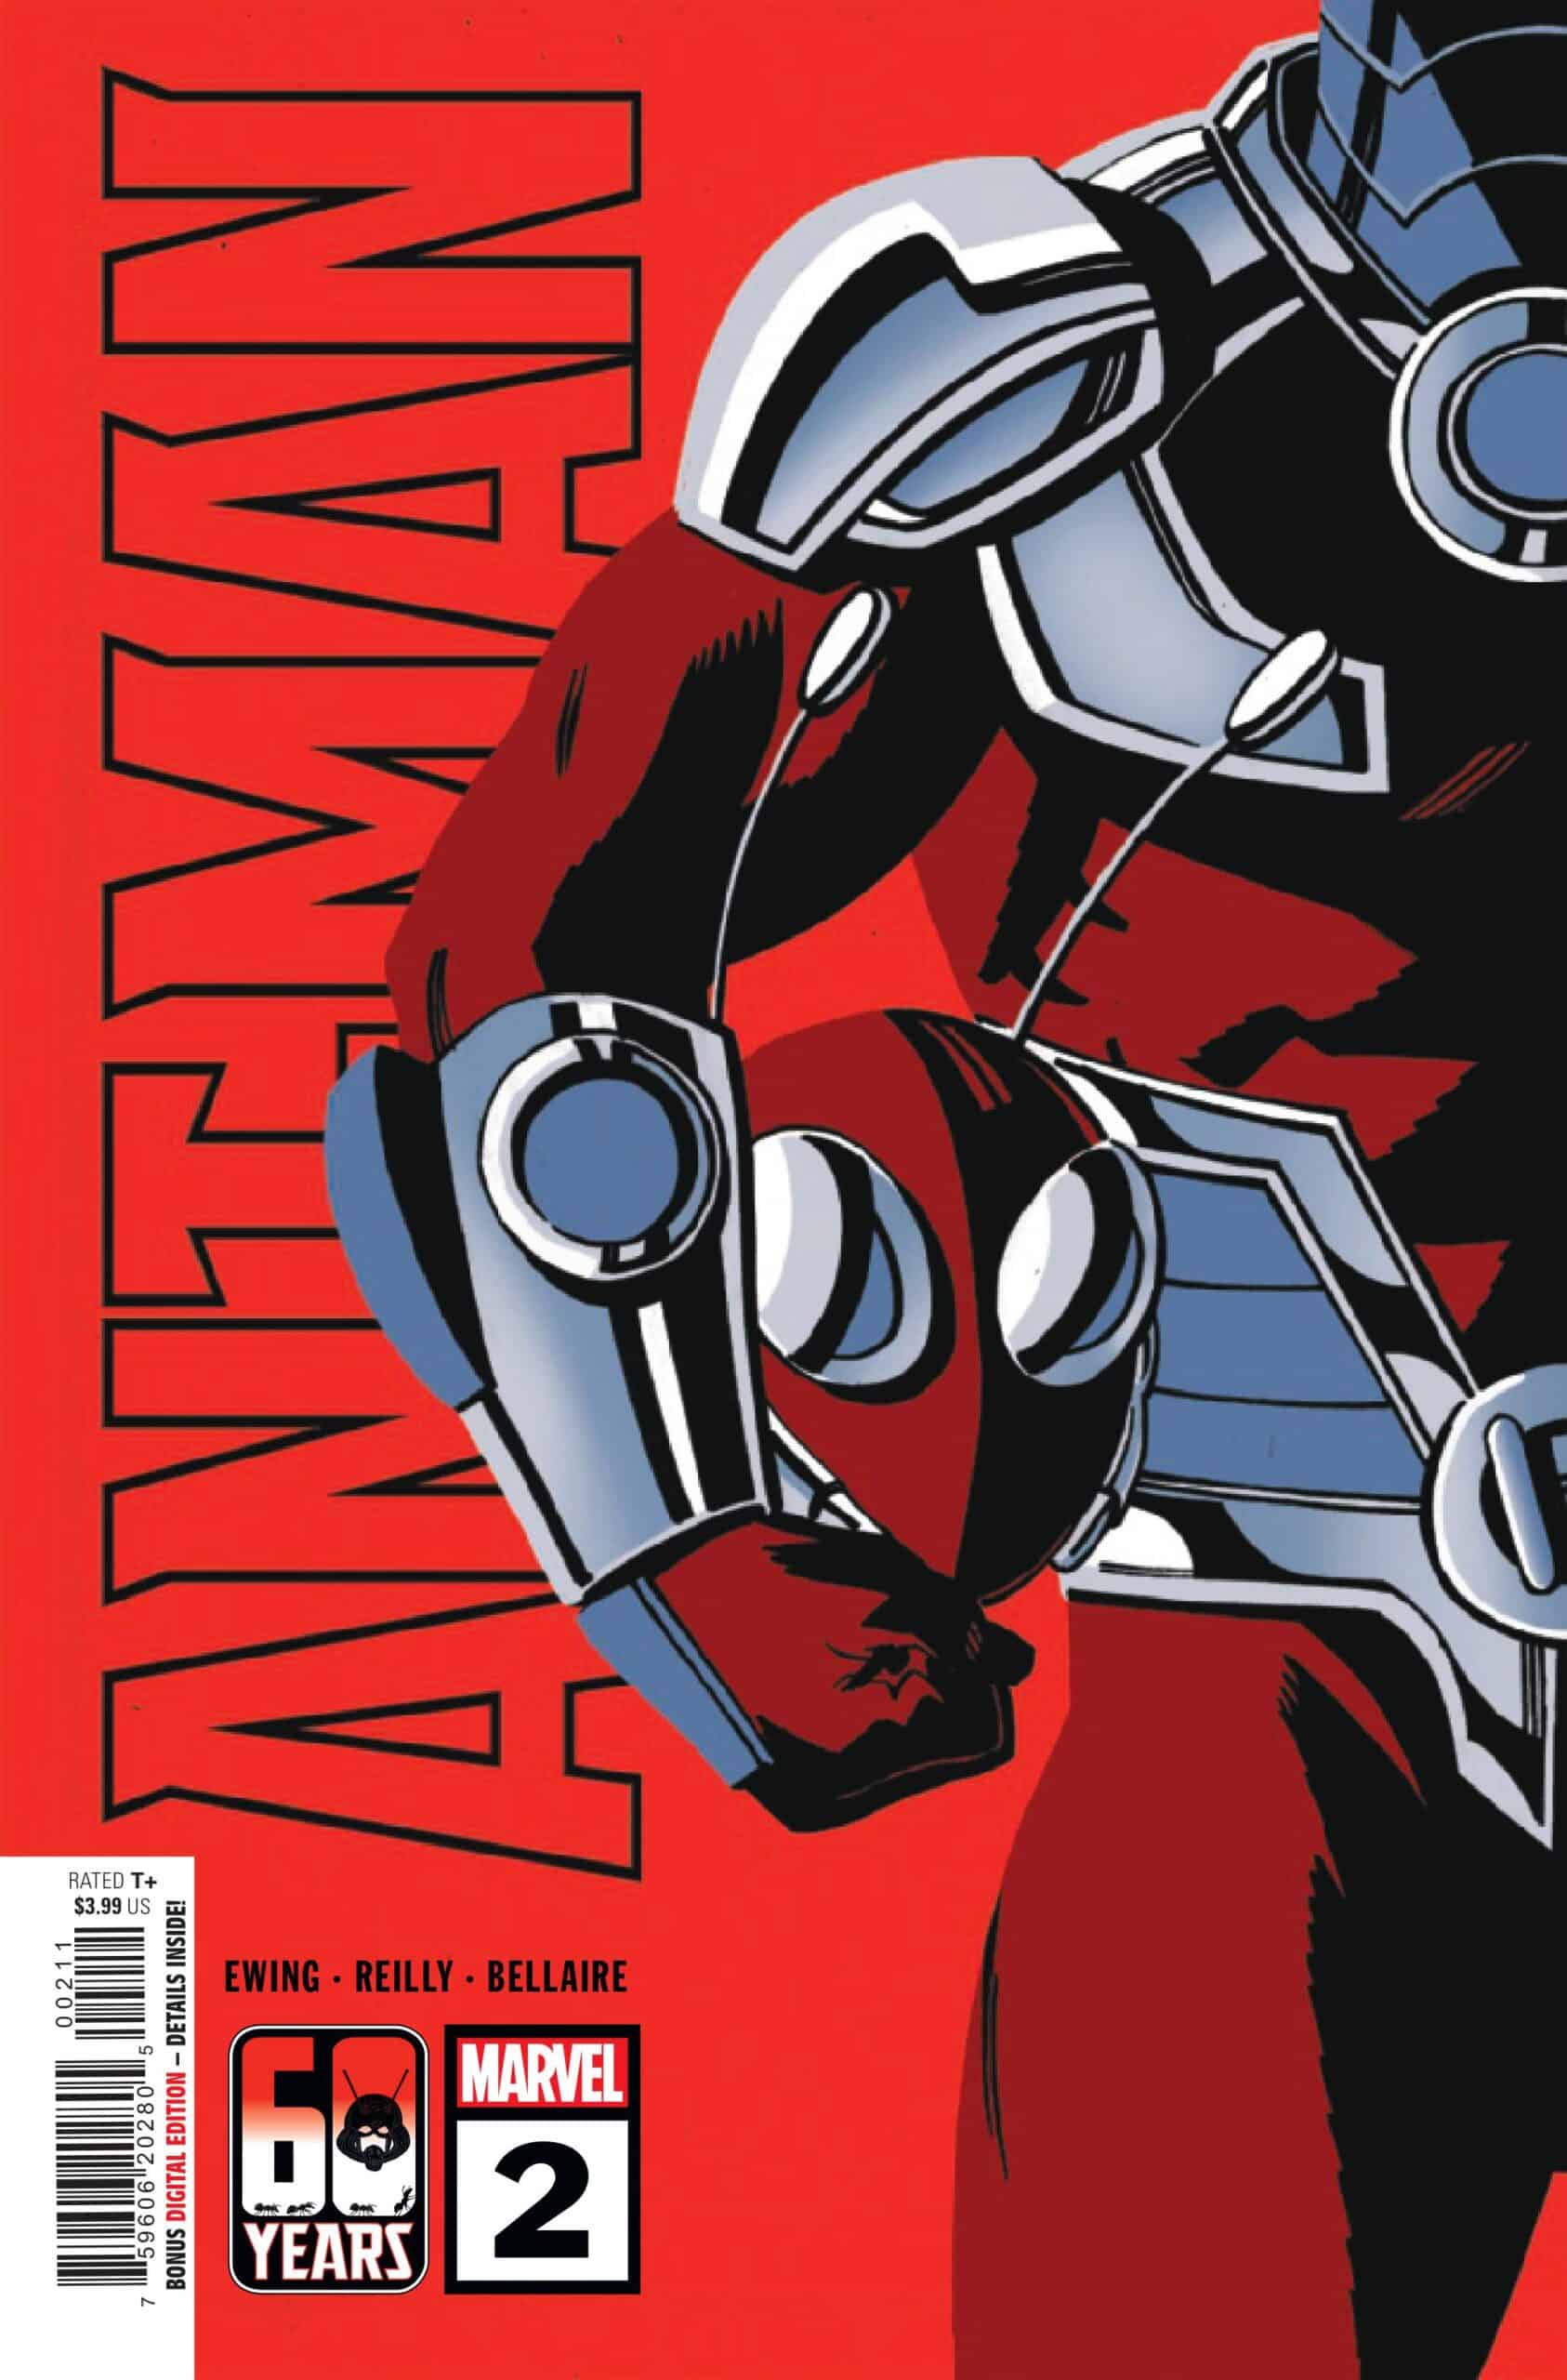 Marvel's Ant-Man And The Wasp Comics, Graphic Novels, & Manga